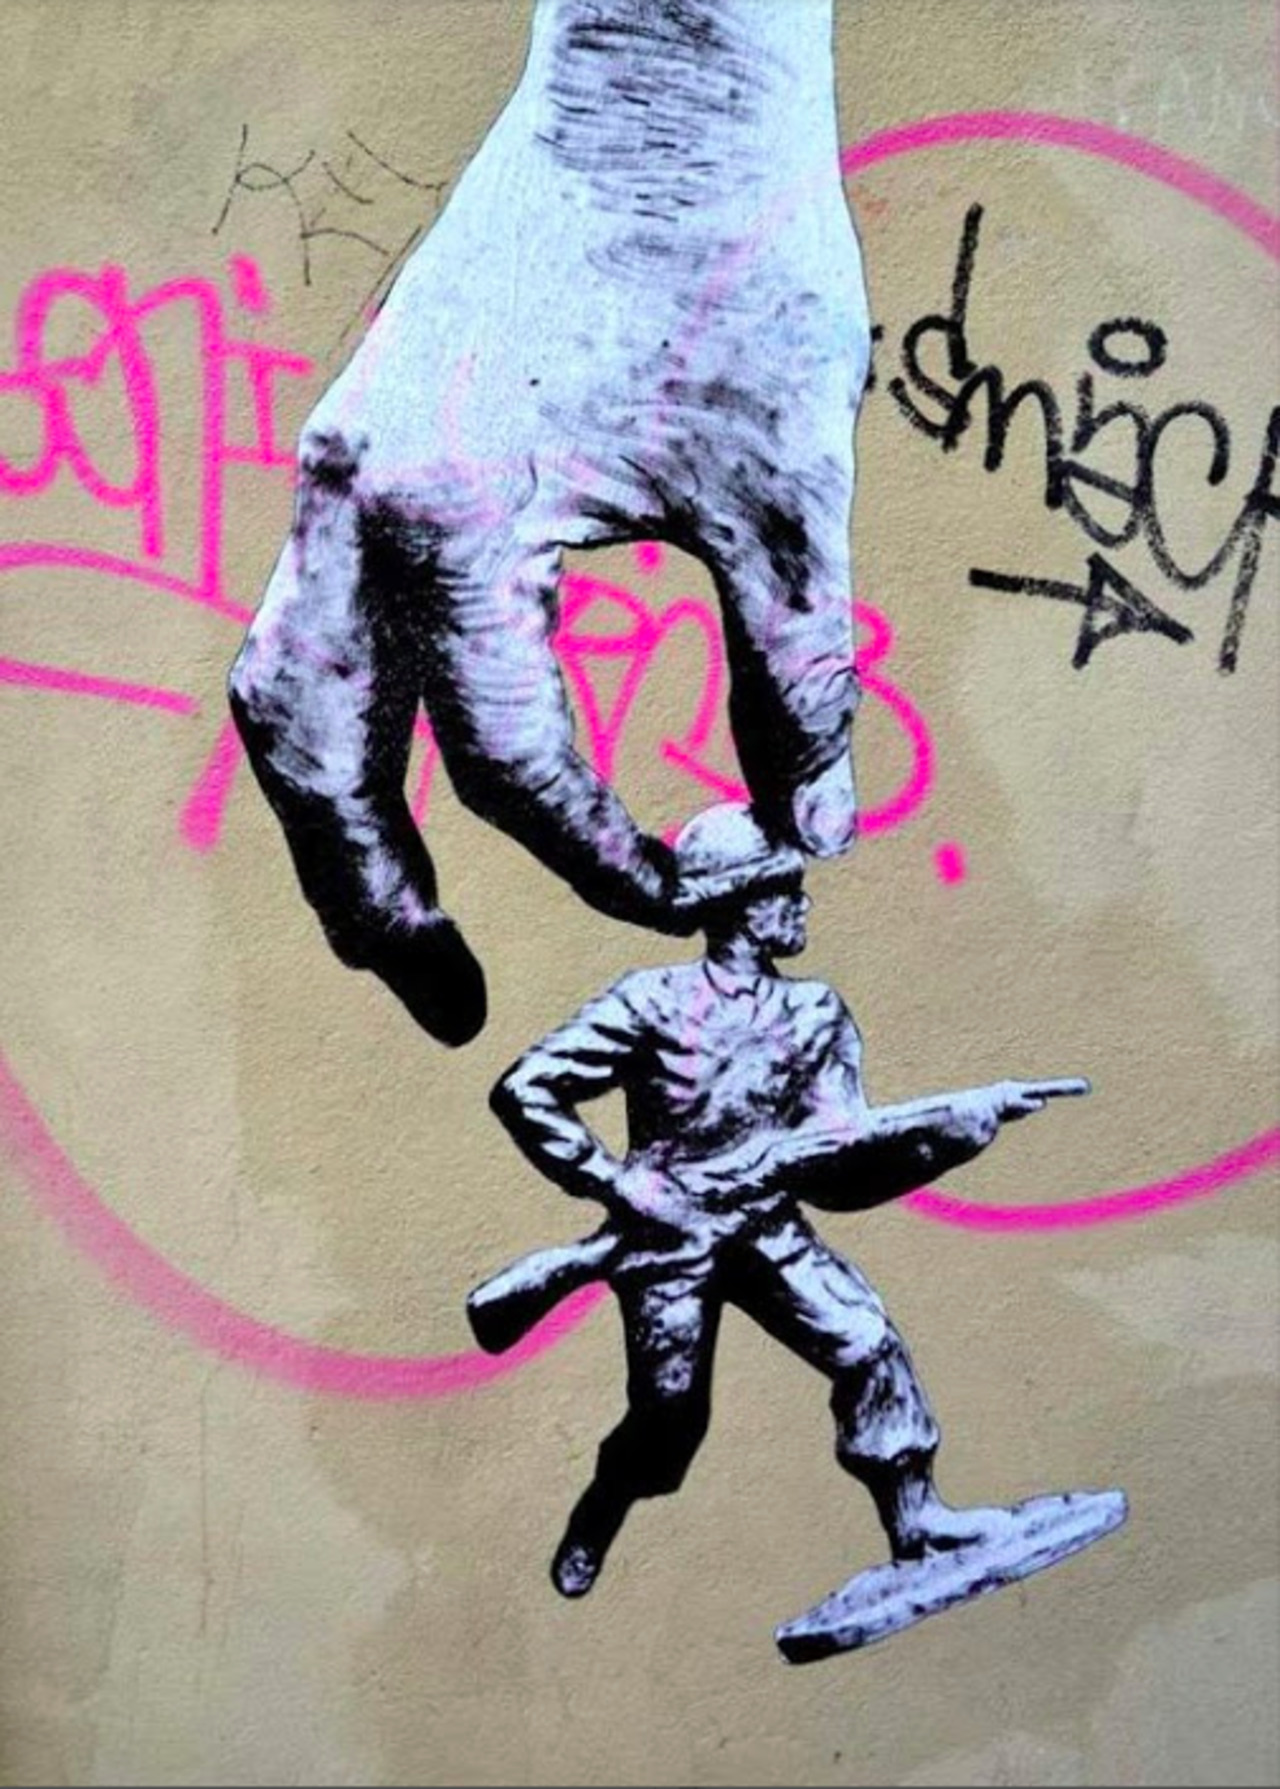 "@robertsnickc: #Streetart by Levalet #Paris #France #art 
https://plus.google.com/u/0/communities/110555863698582336481 http://t.co/1FqbiyFBdj" Kakamega tena? Sio Mandera?